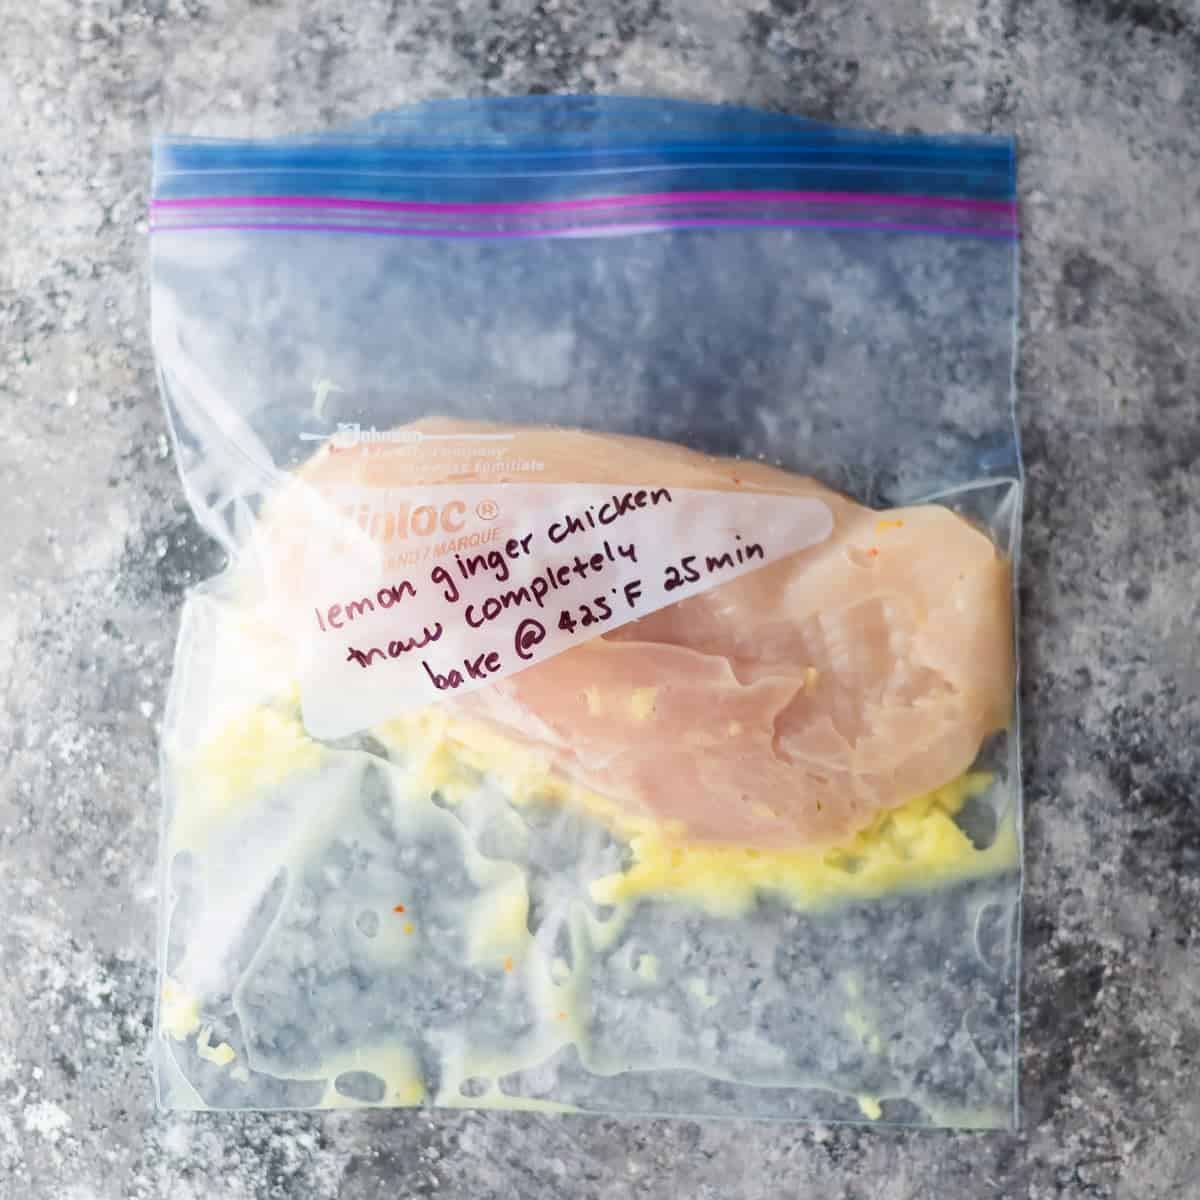 Ginger and lemon chicken marinade on chicken in freezer bag